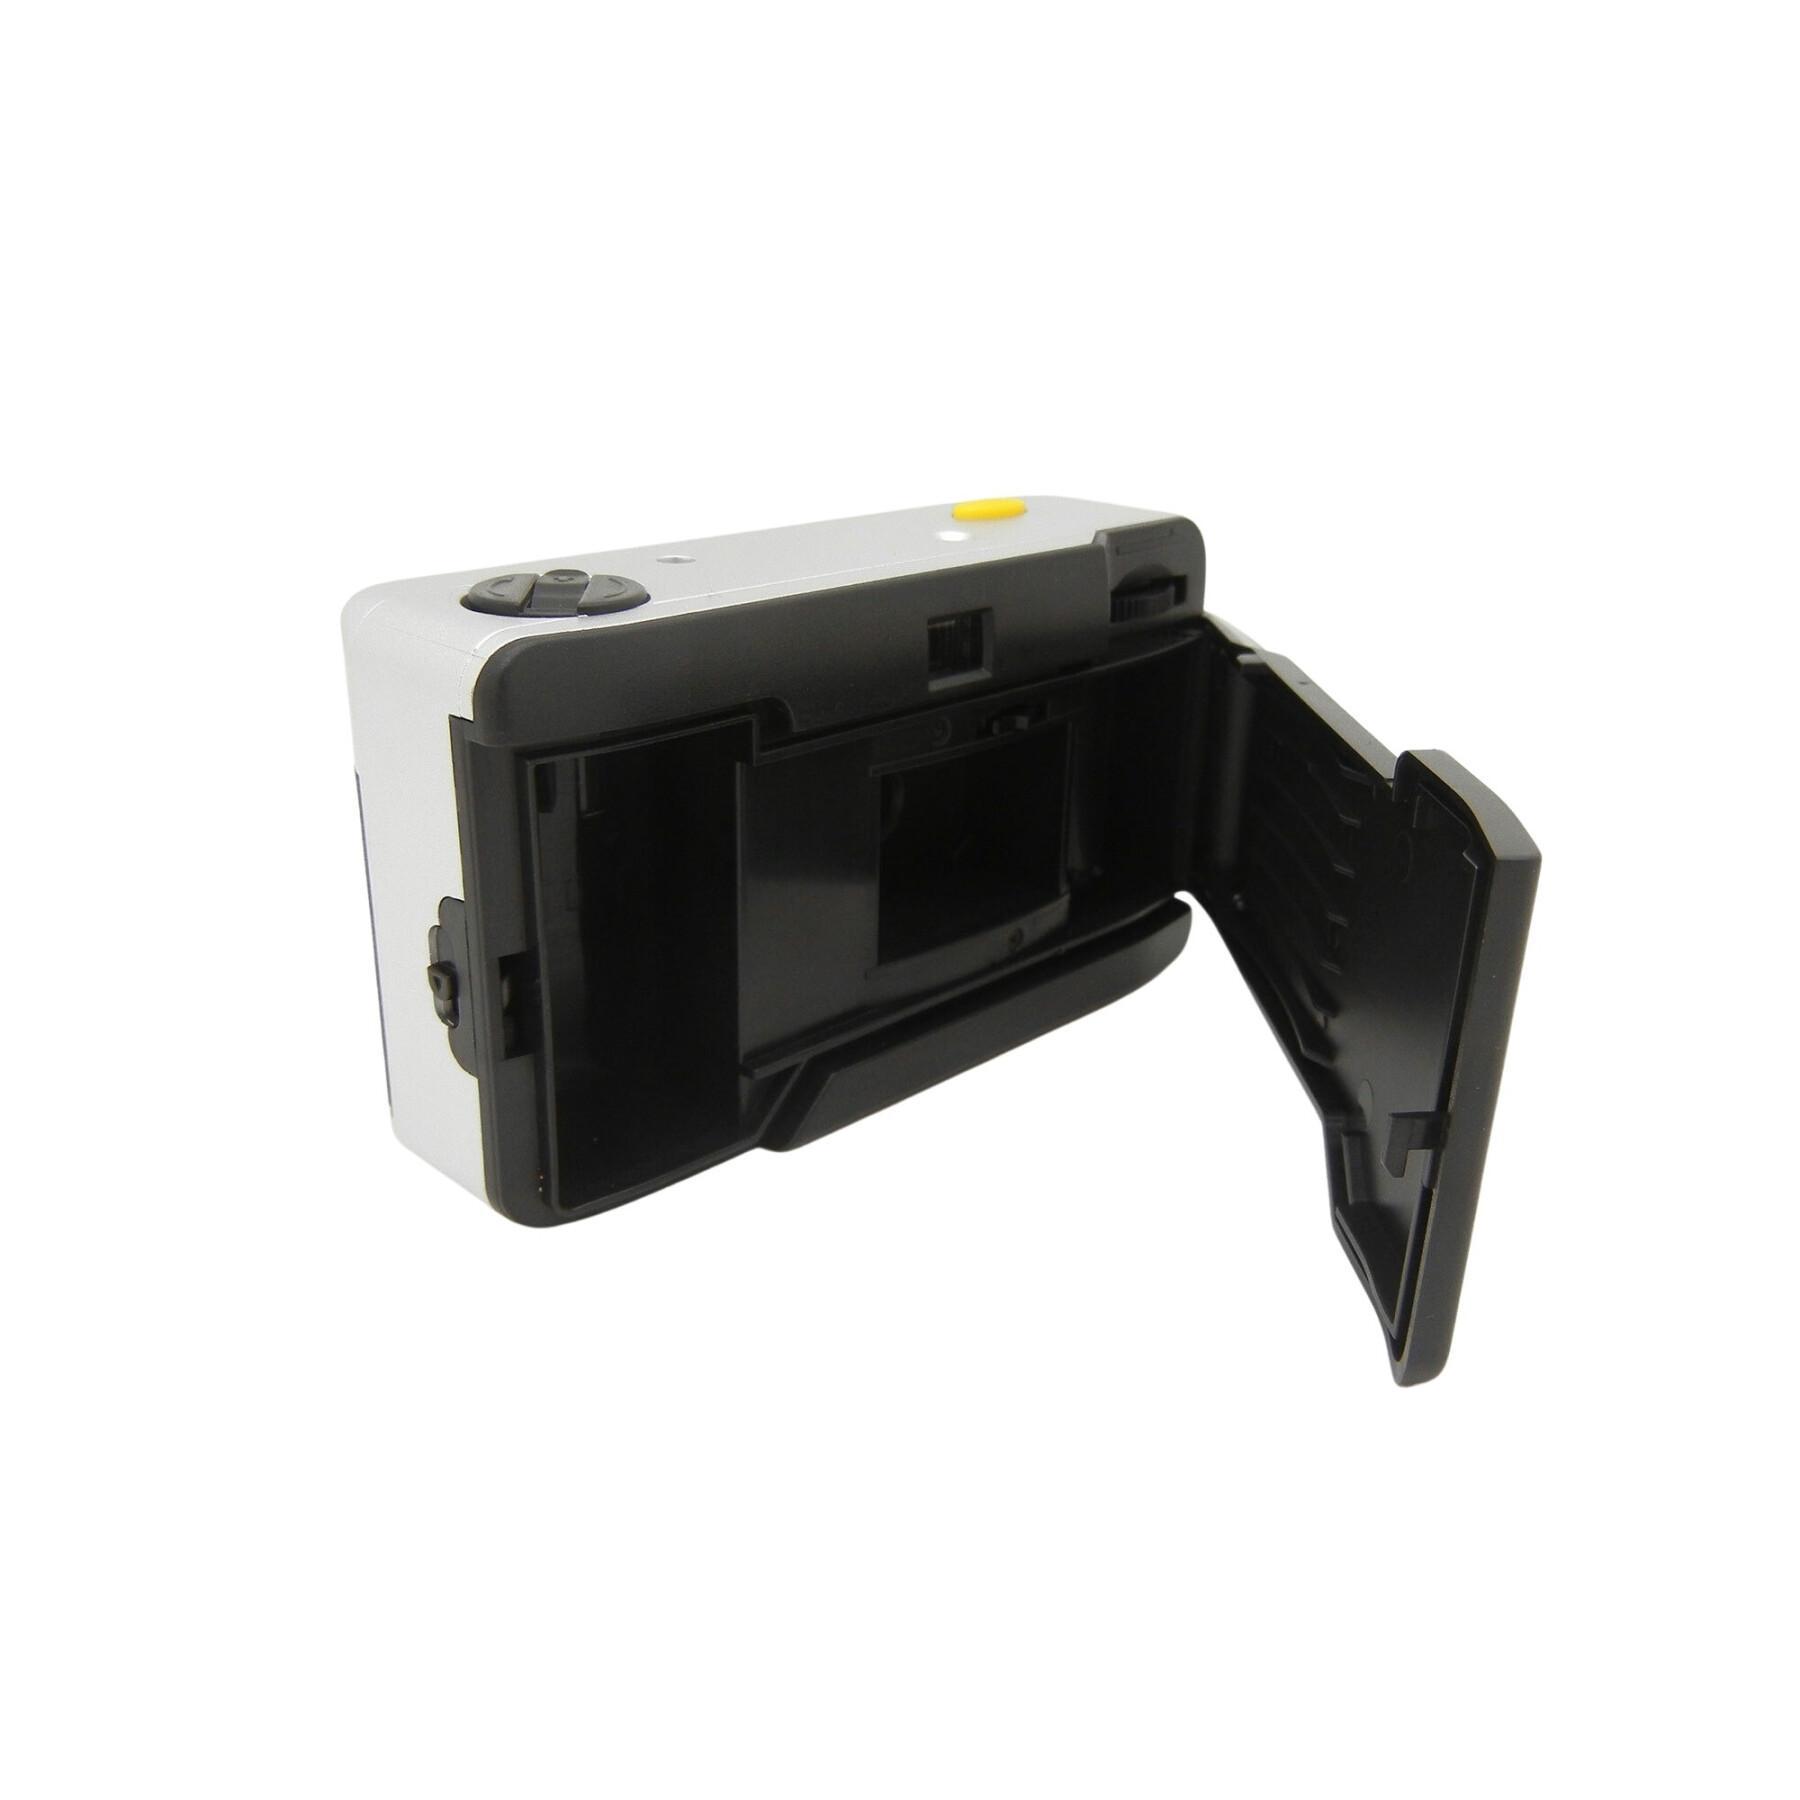 Caméra analogique Easypix 35 Analogue reuseable 35mm